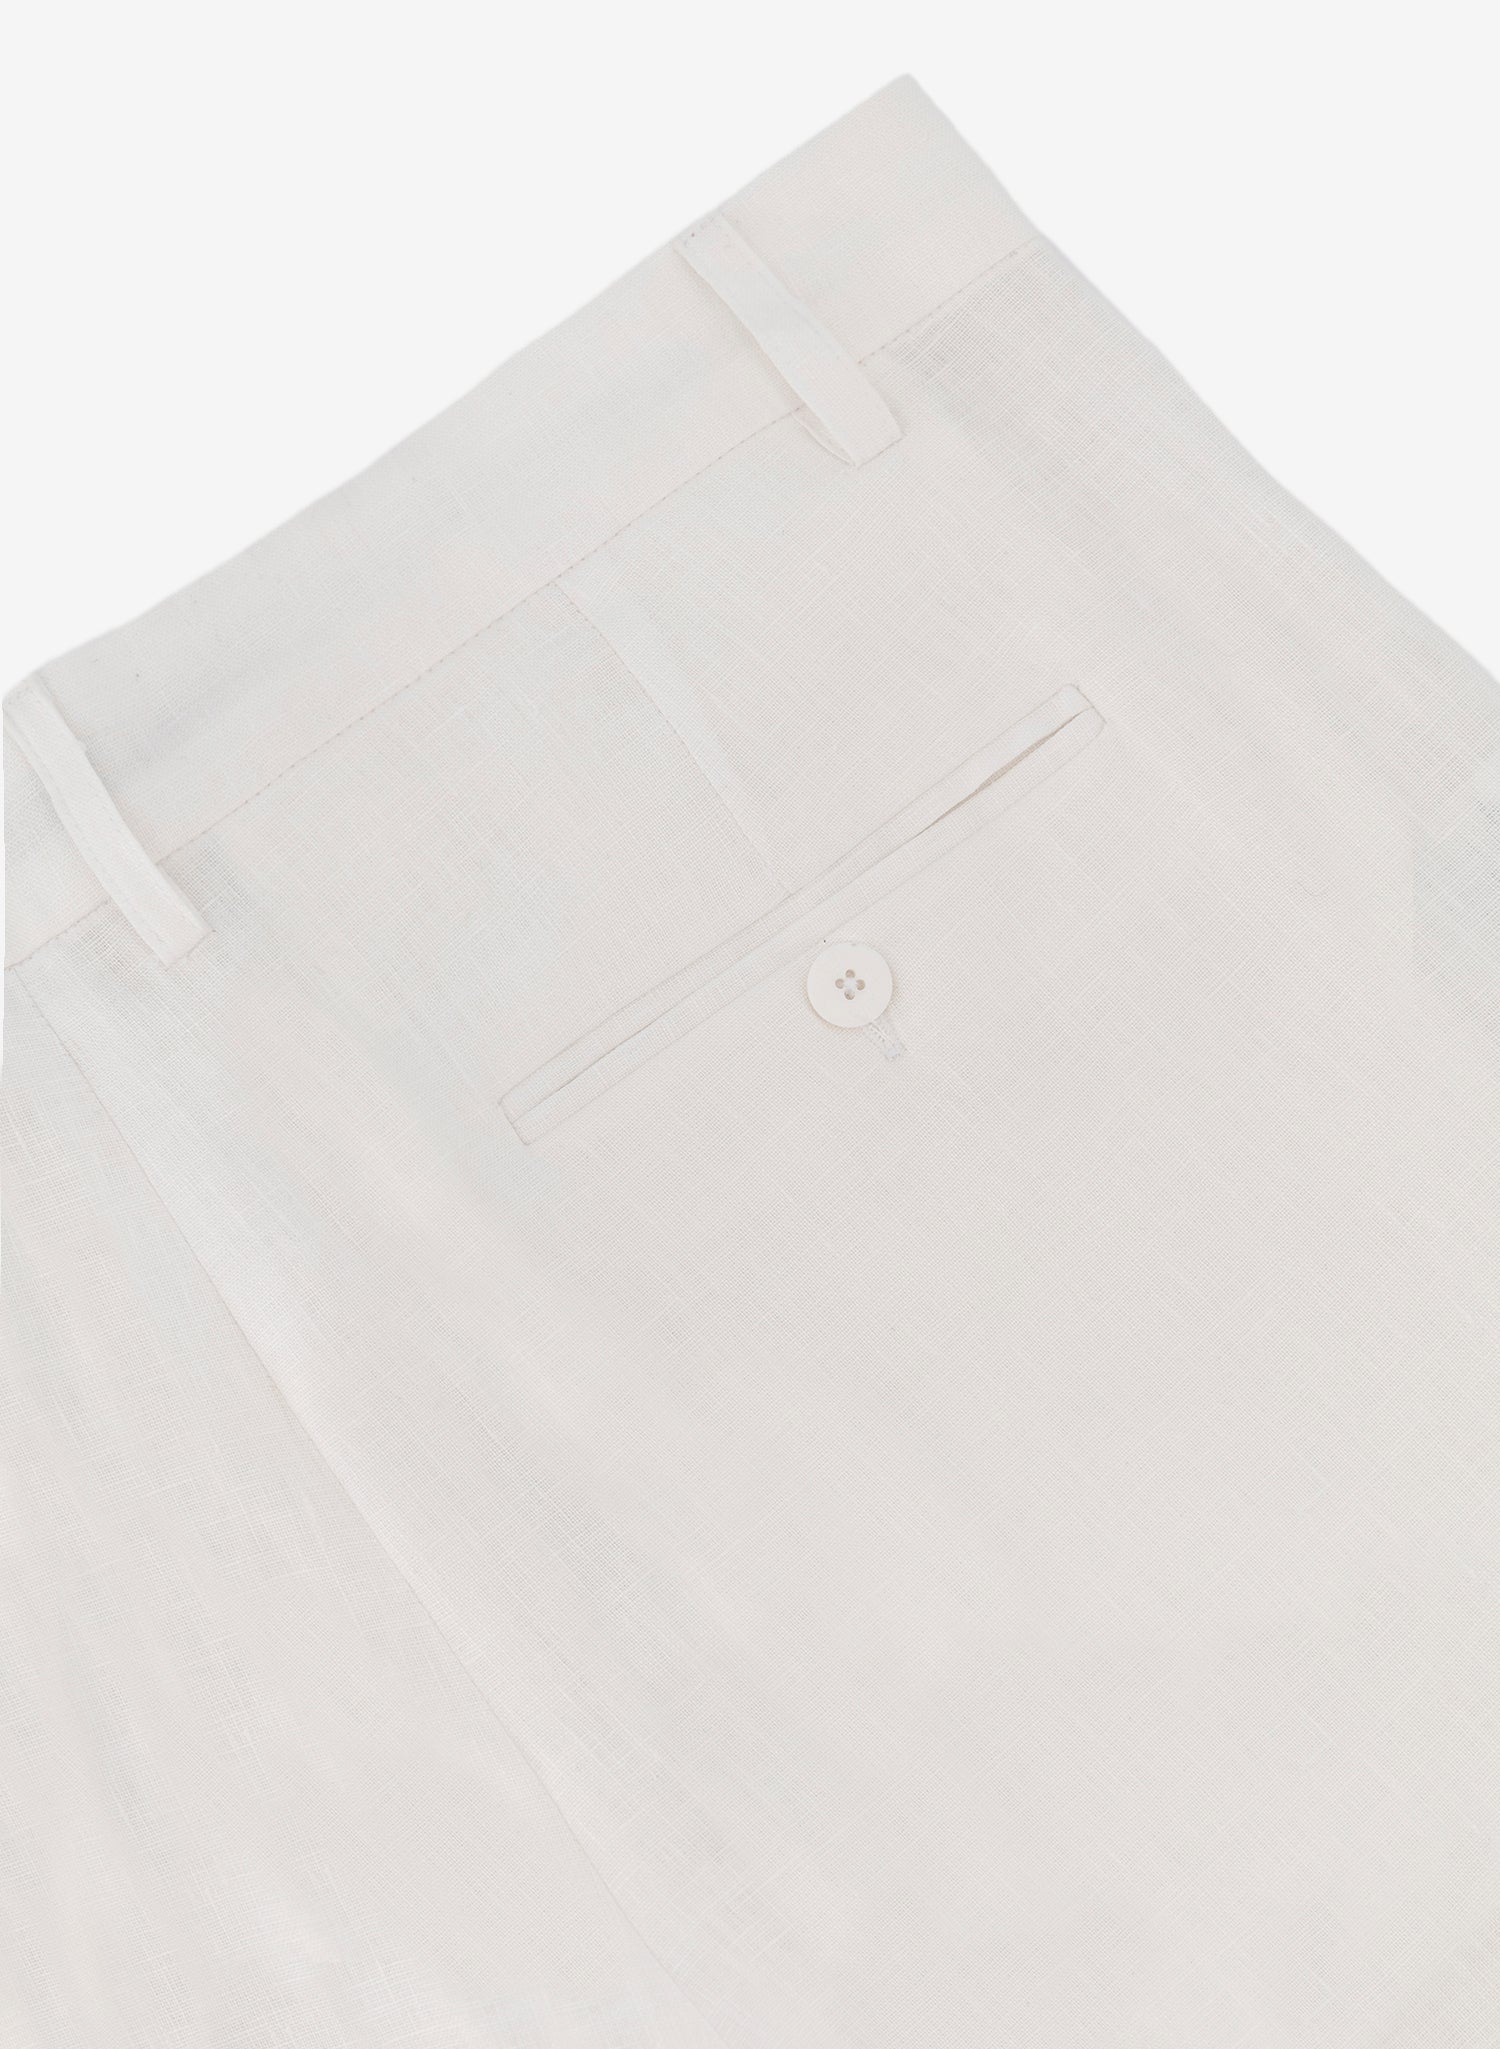 Pantalón Básico Slim Fit blanco